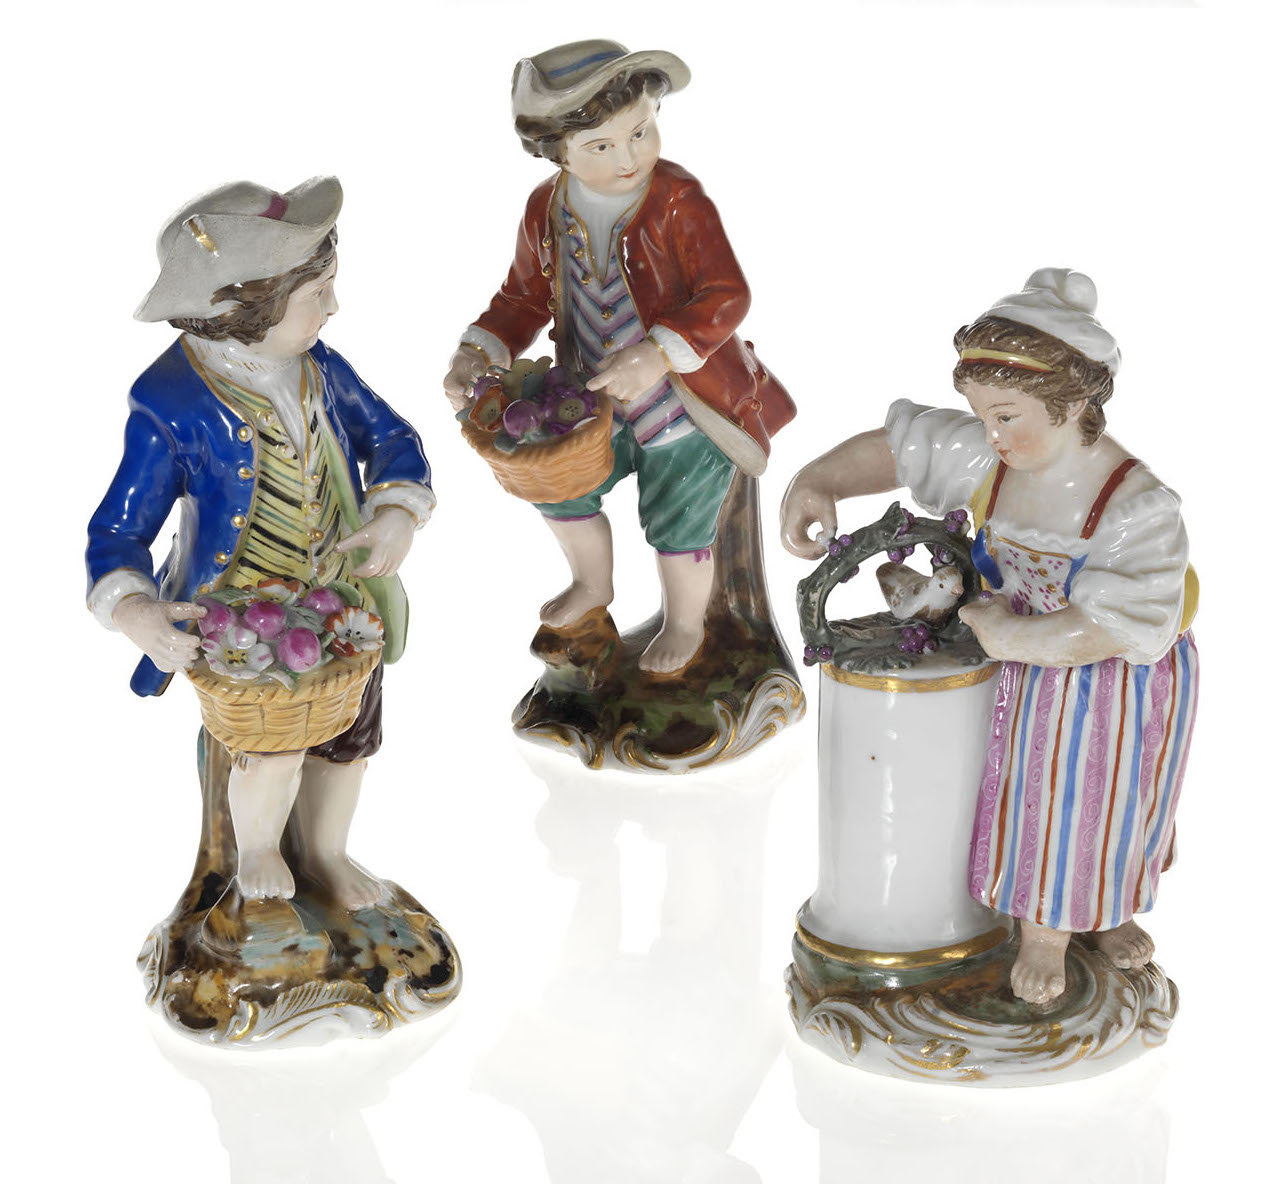 Three Porcelain Figurines of Children Gardeners